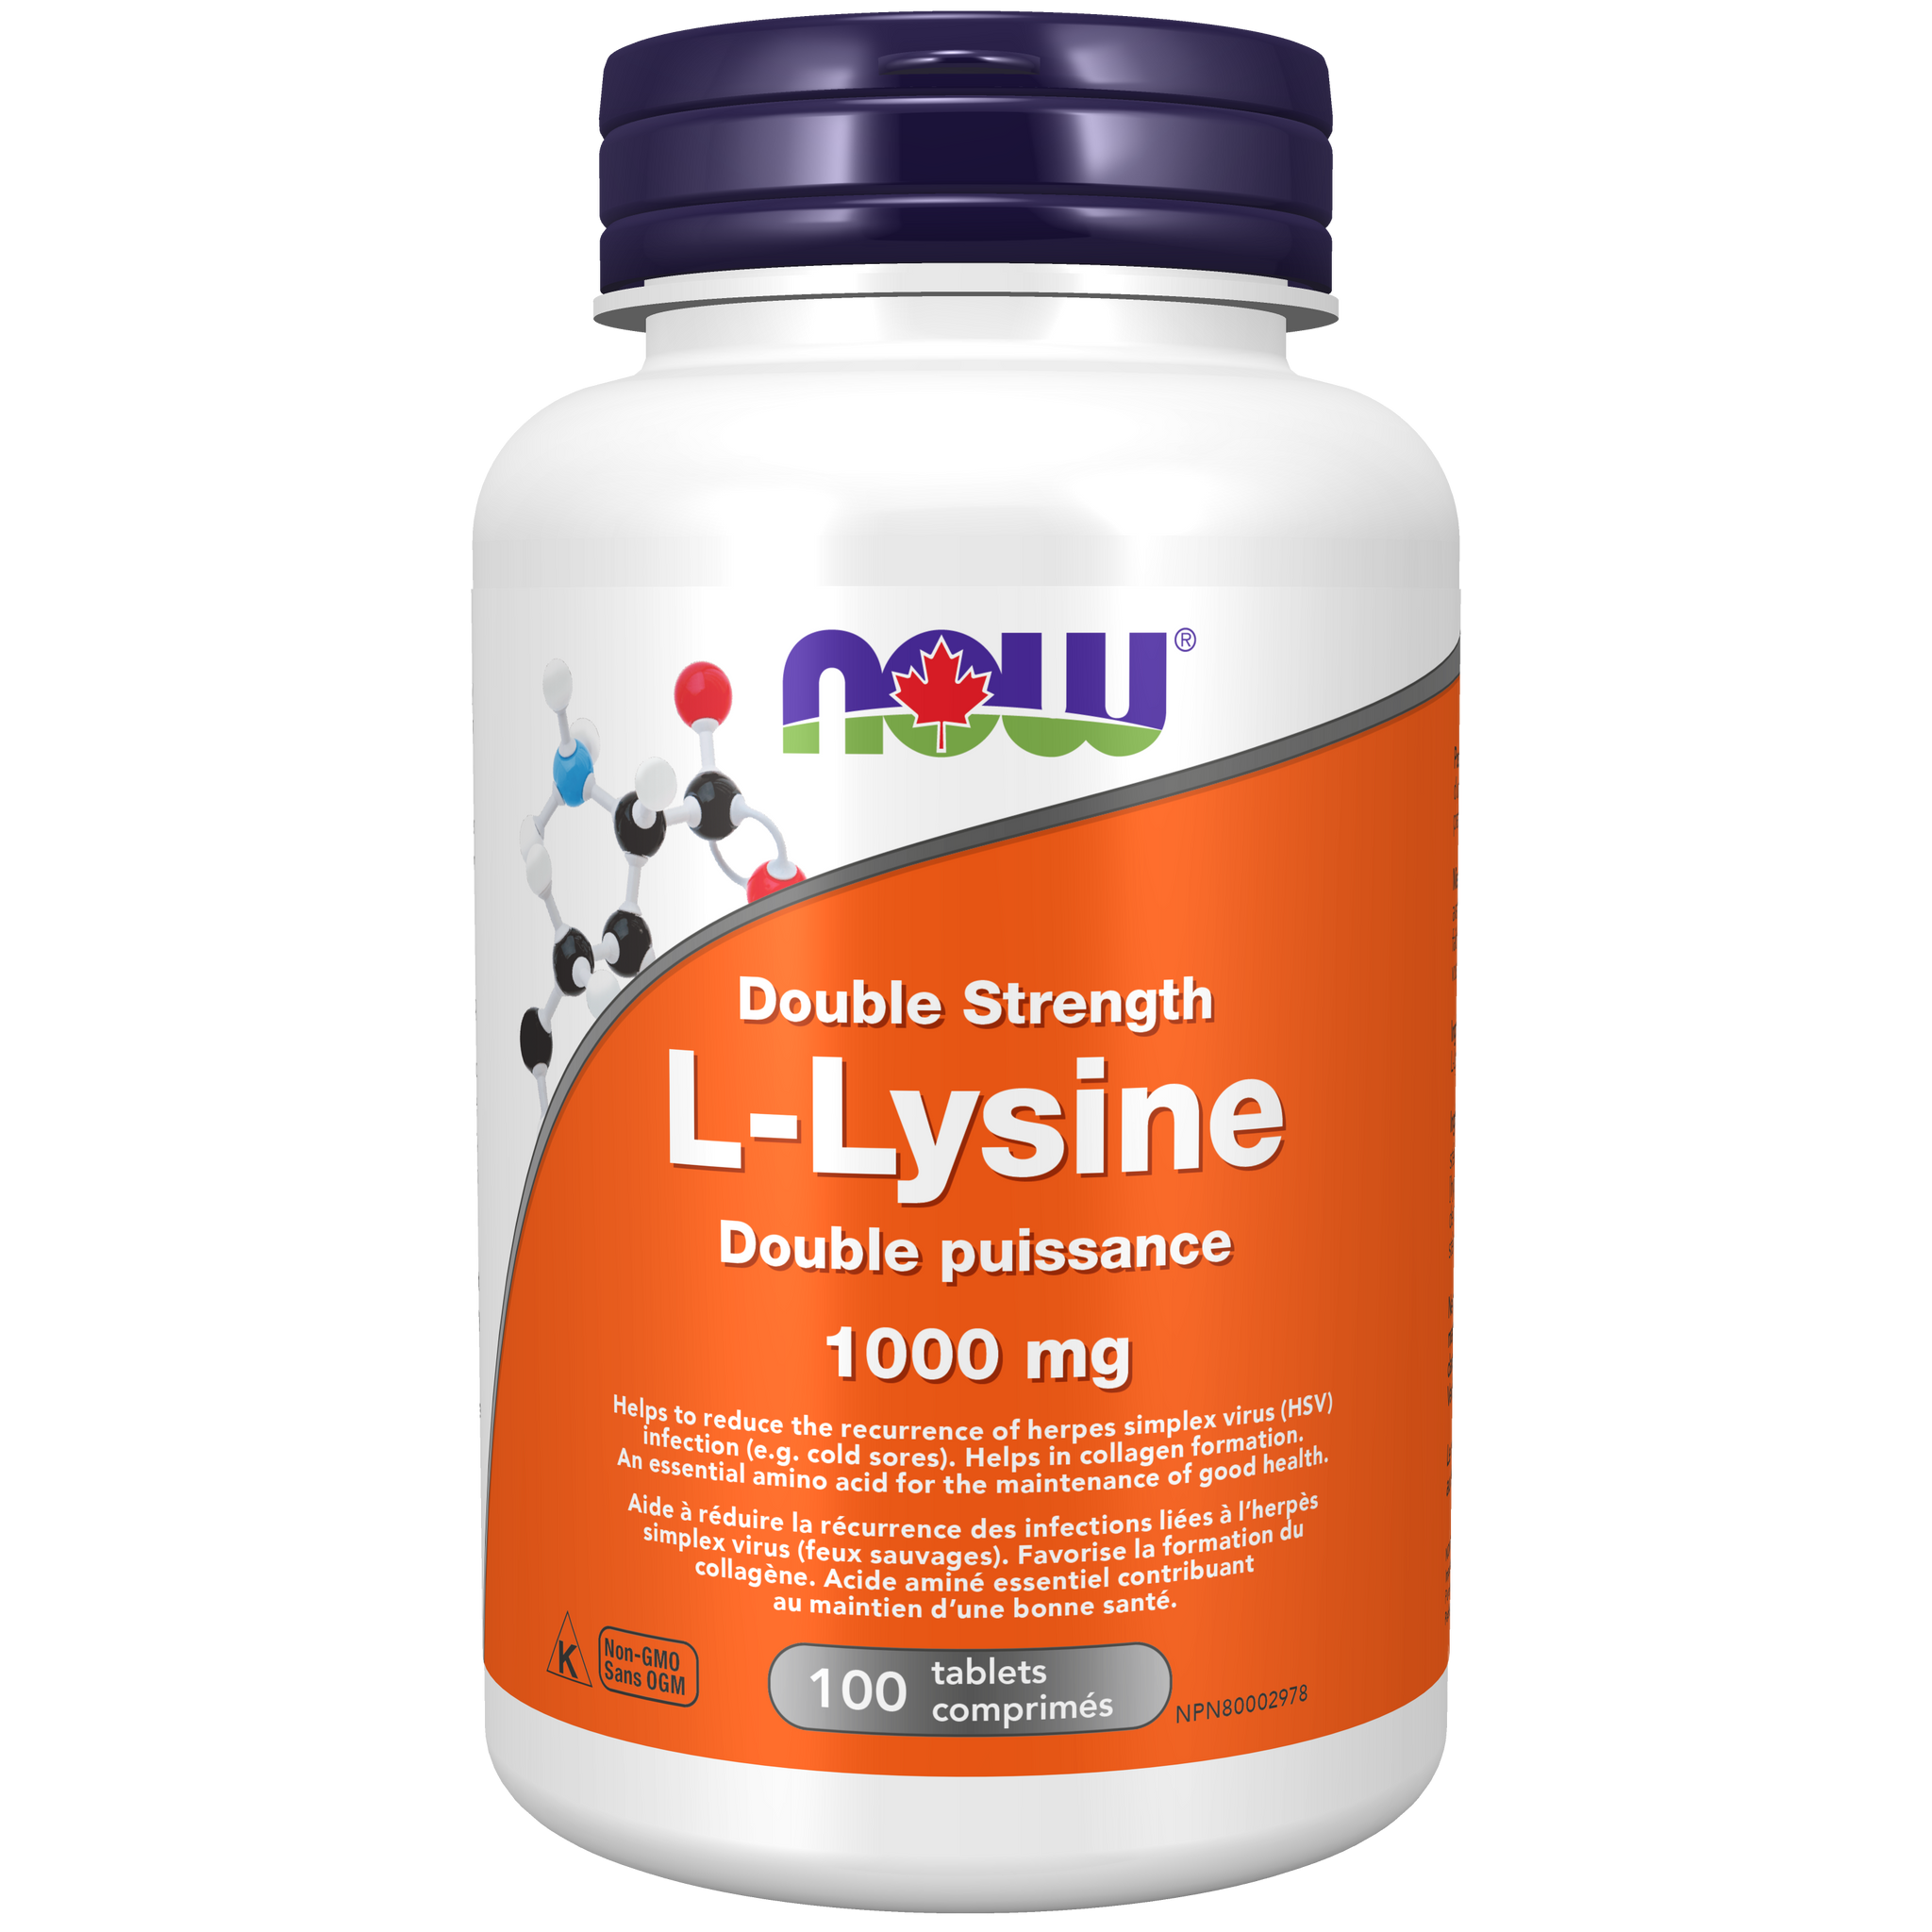 NOW L-Lysine 1000mg Extra Strength